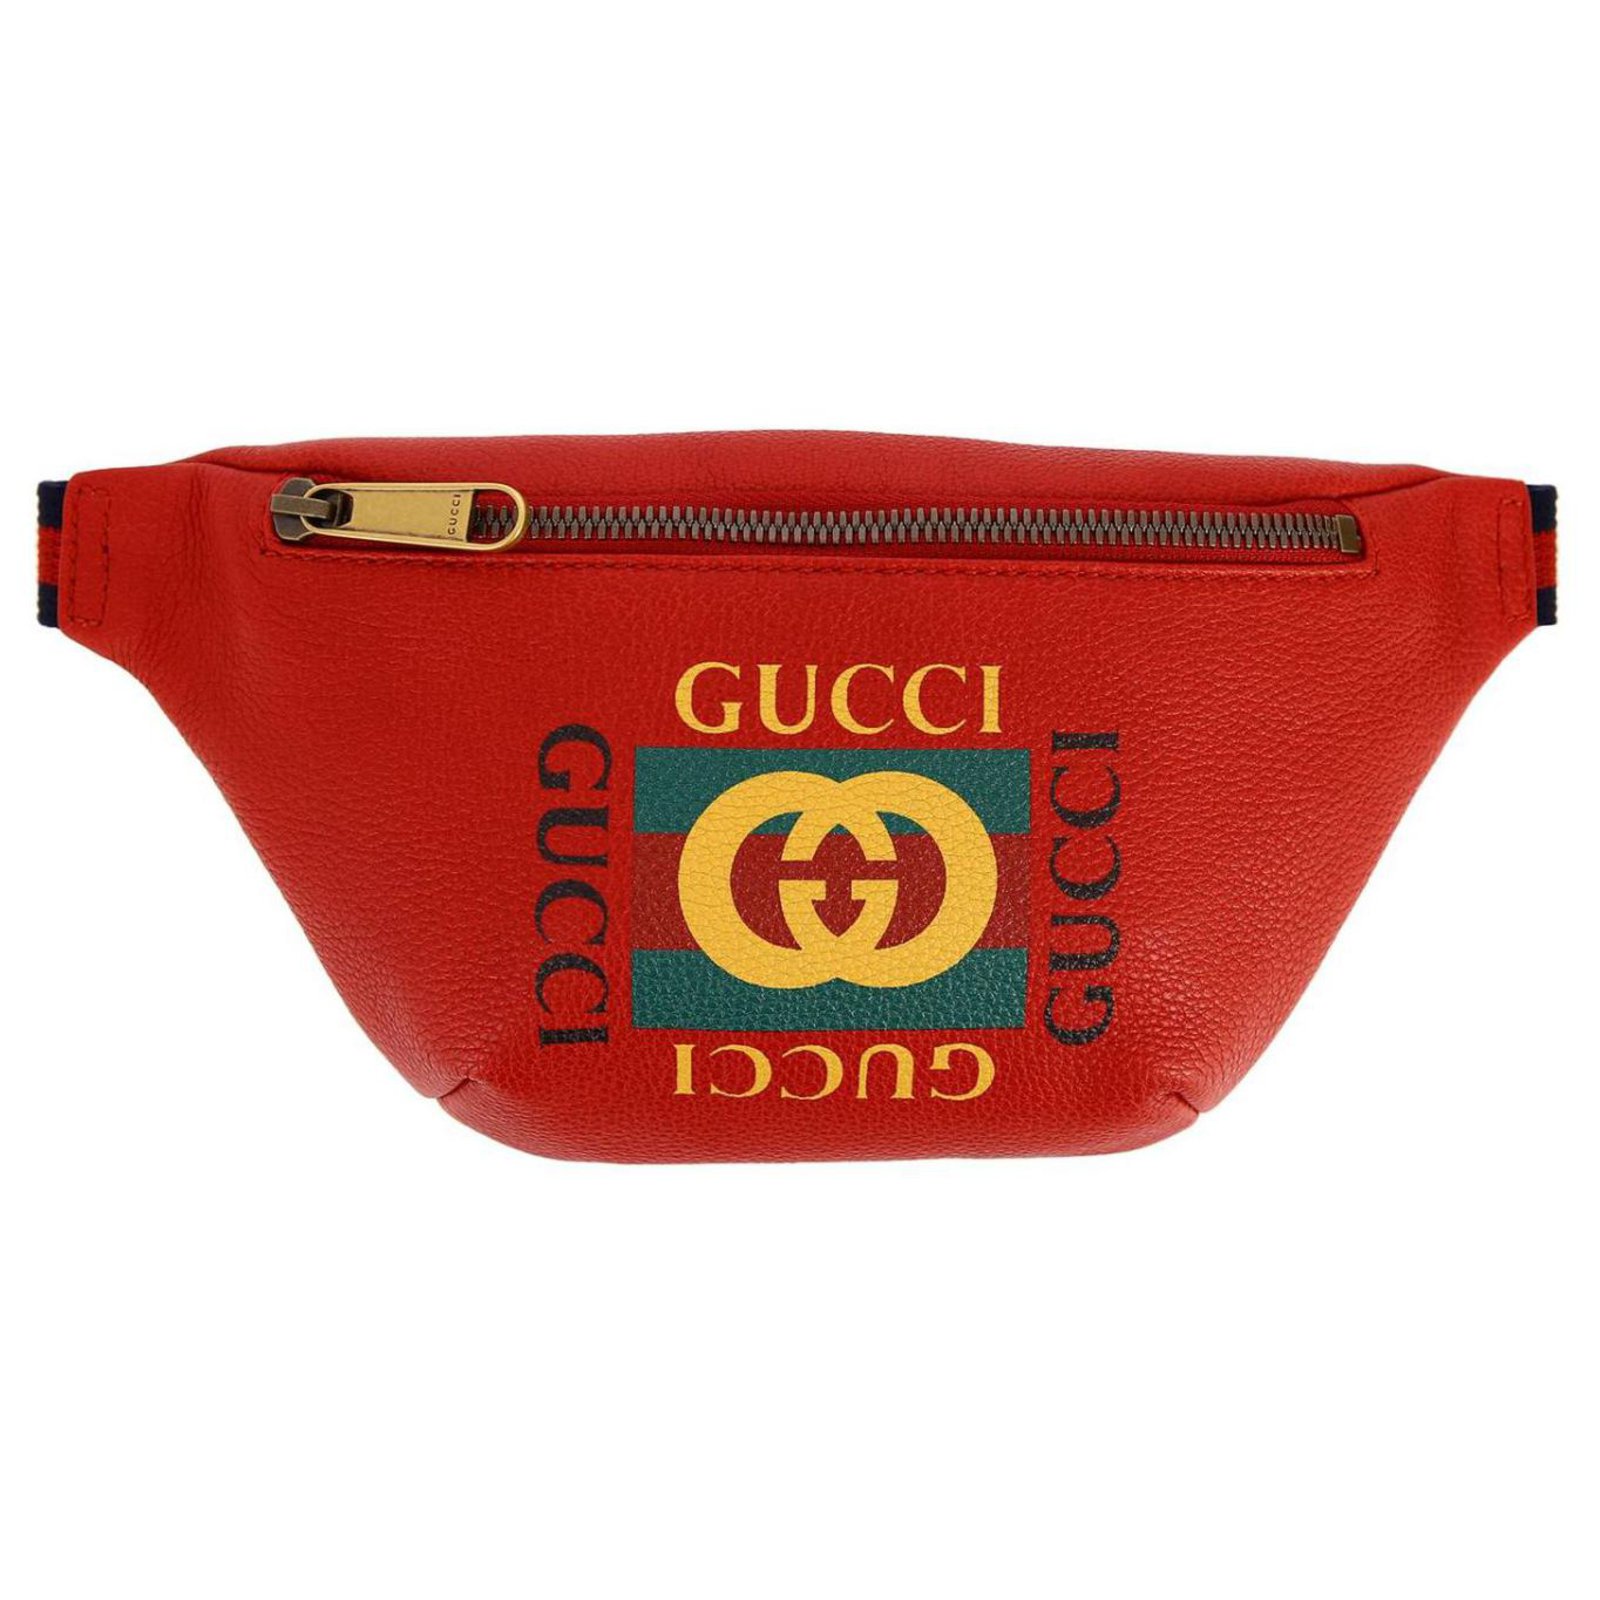 gucci brand bags